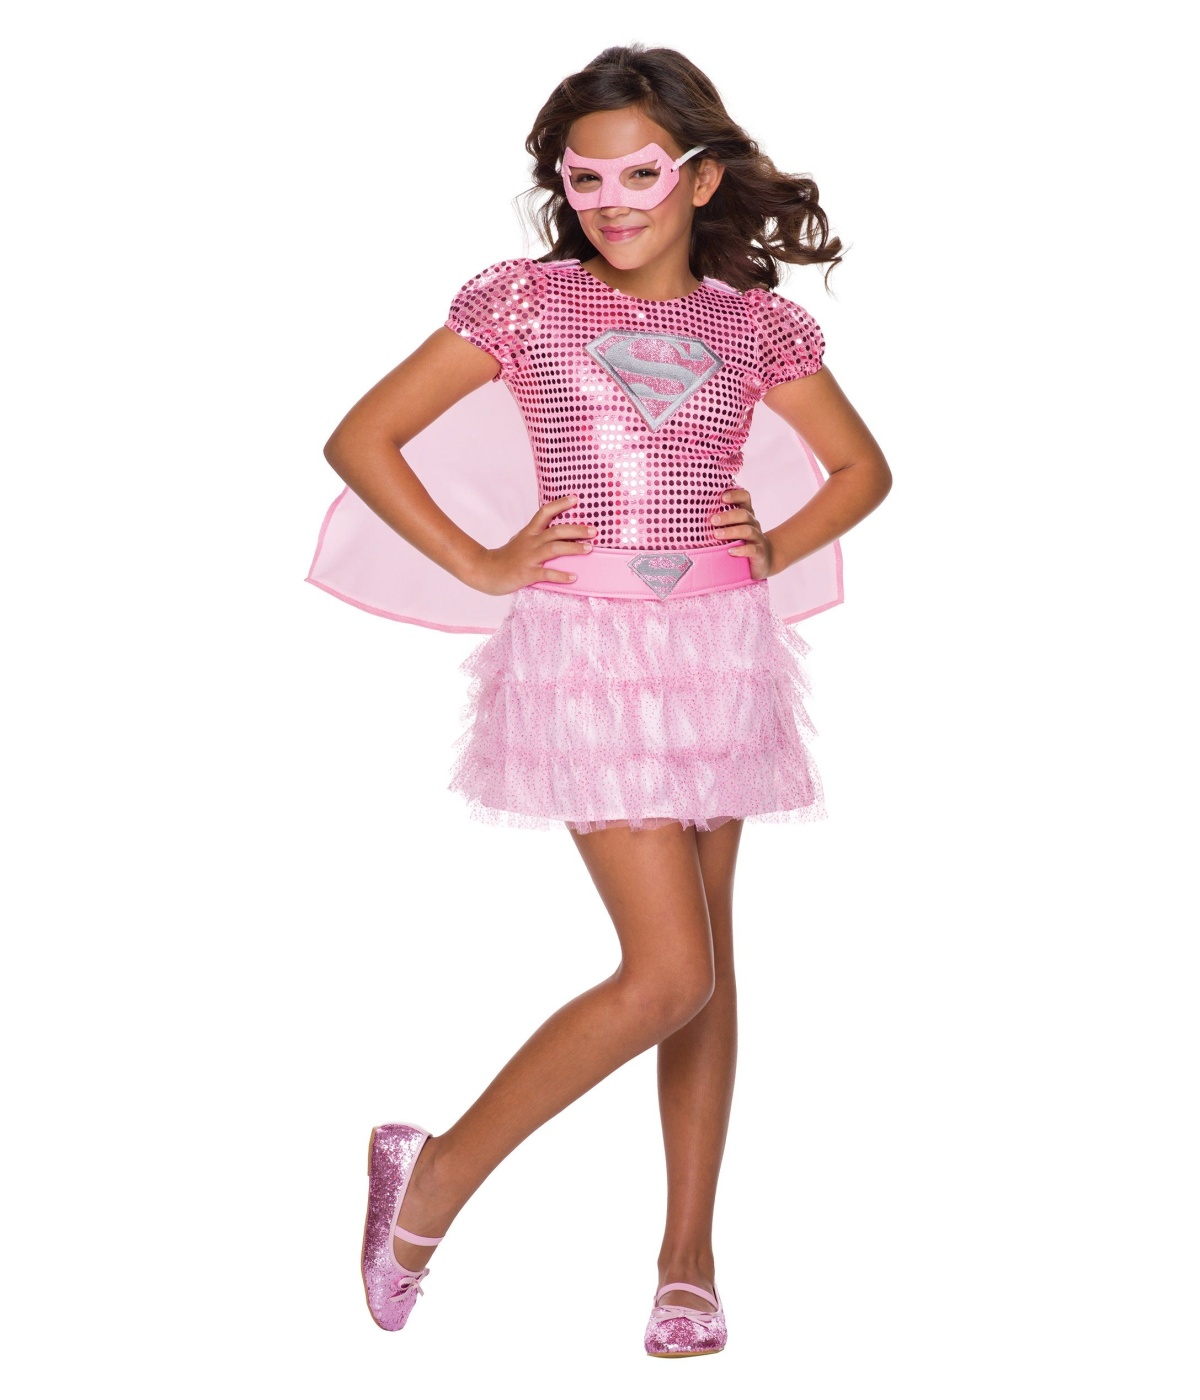  Girls Super Pink Costume